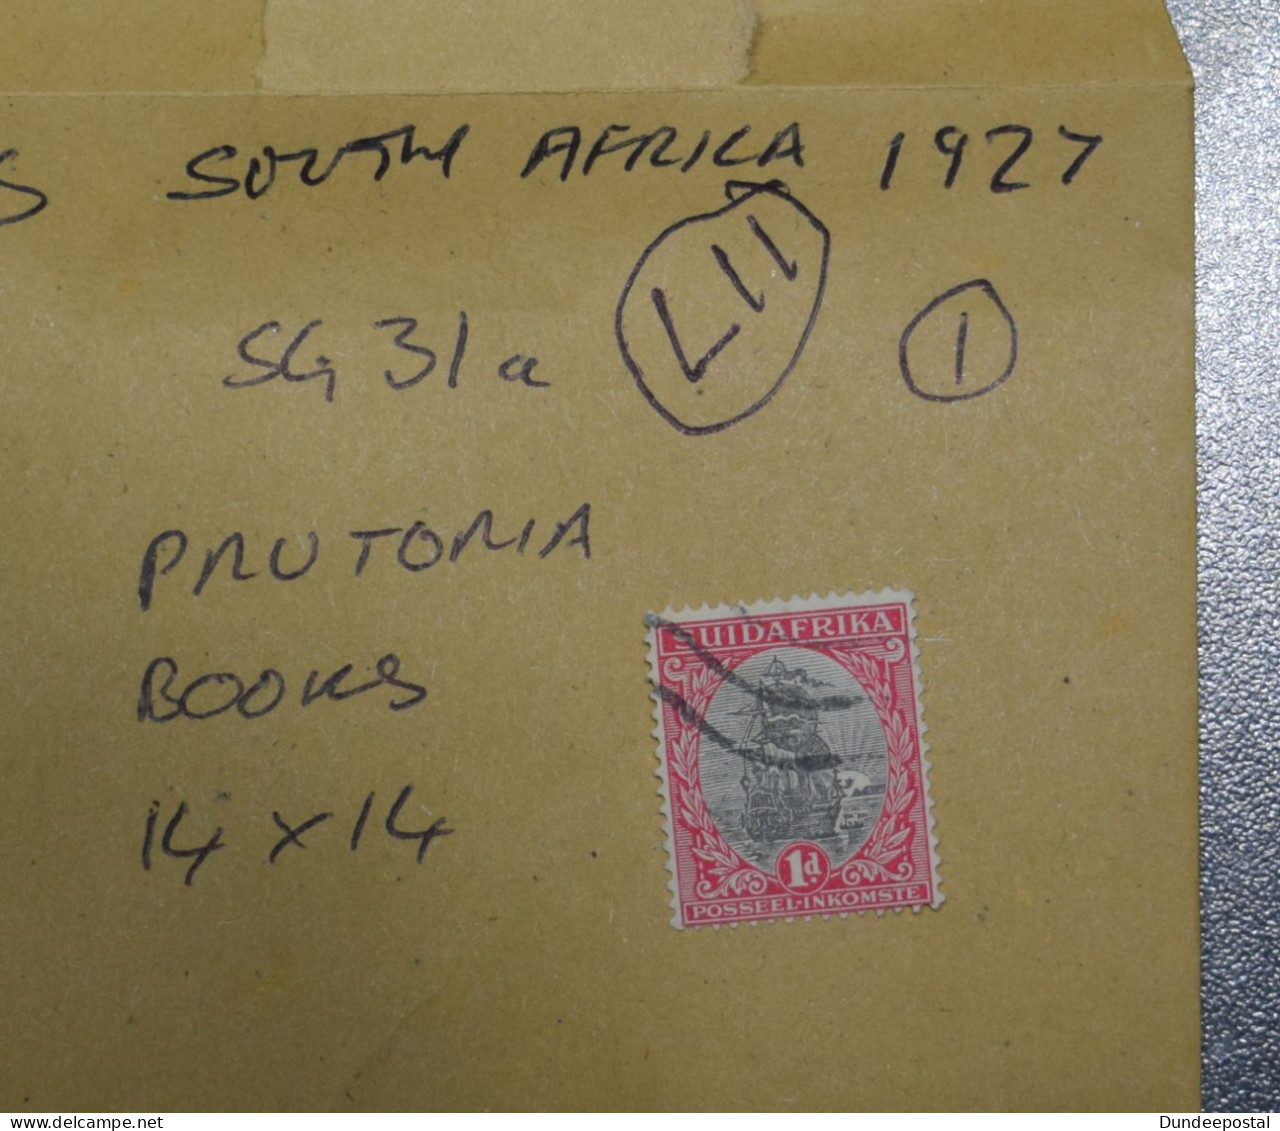 SOUTH AFRICA   STAMPS Drommedaris Ship 1d  1927  L11  ~~L@@K~~ - Used Stamps